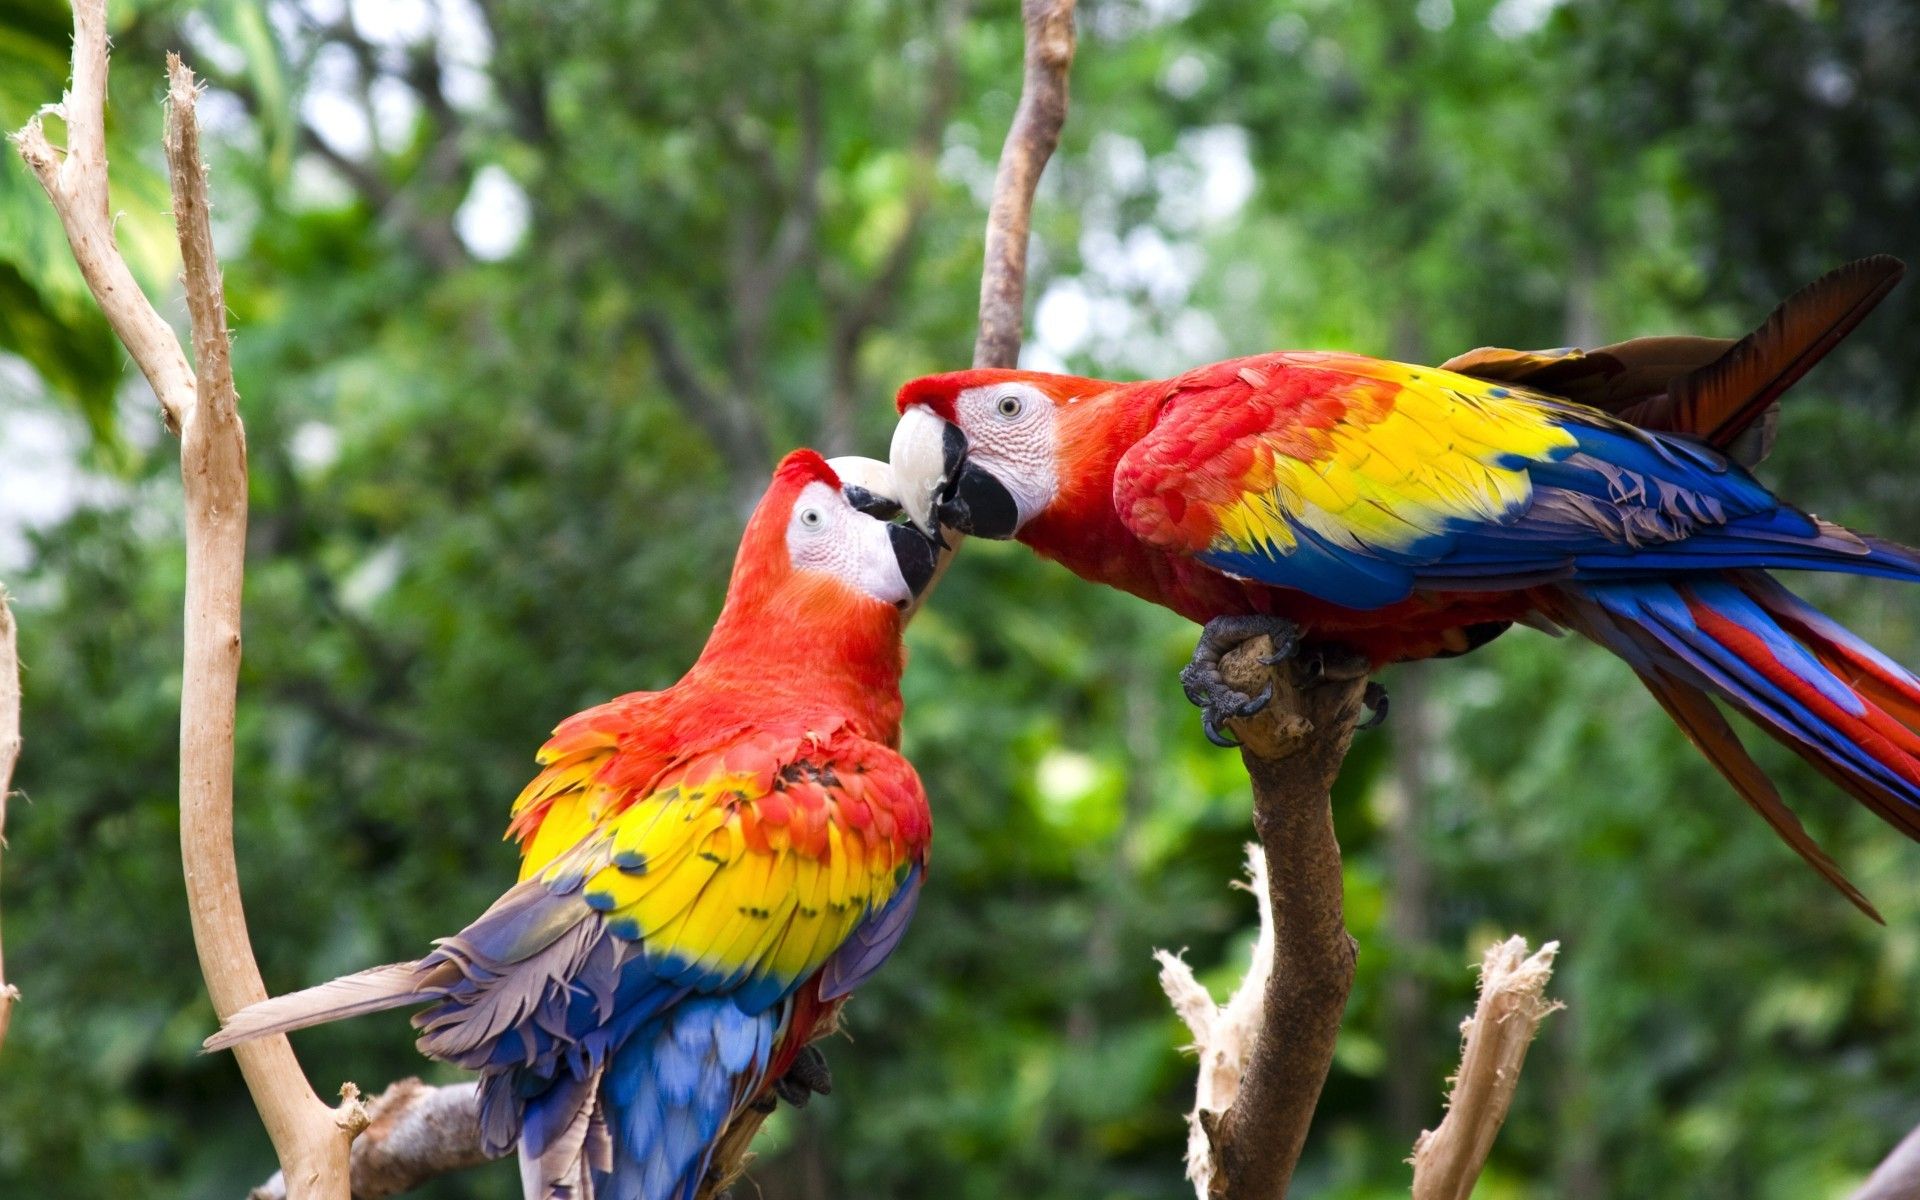 Cute Love Bird Colorful Parrot HD Wallpaper. Parakeet cage, Parrot image, Pet birds